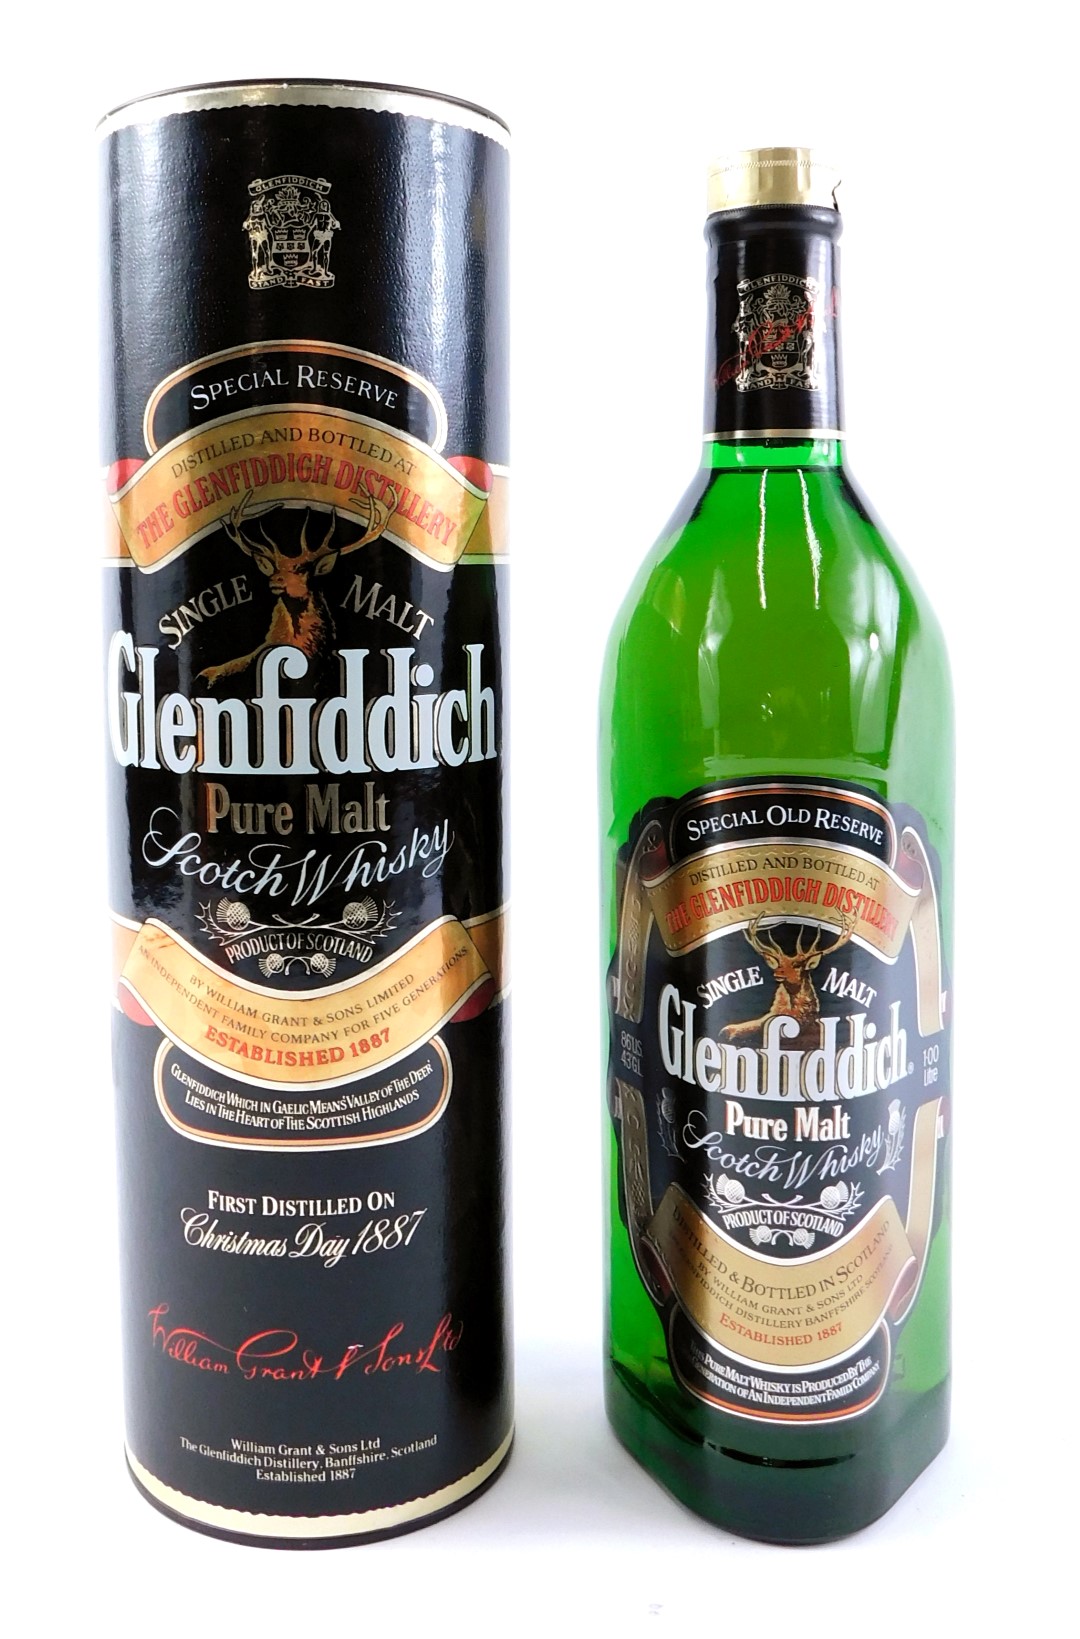 A Glenfiddich Single Malt Scotch Whisky, 1ltr bottle in cardboard tube.